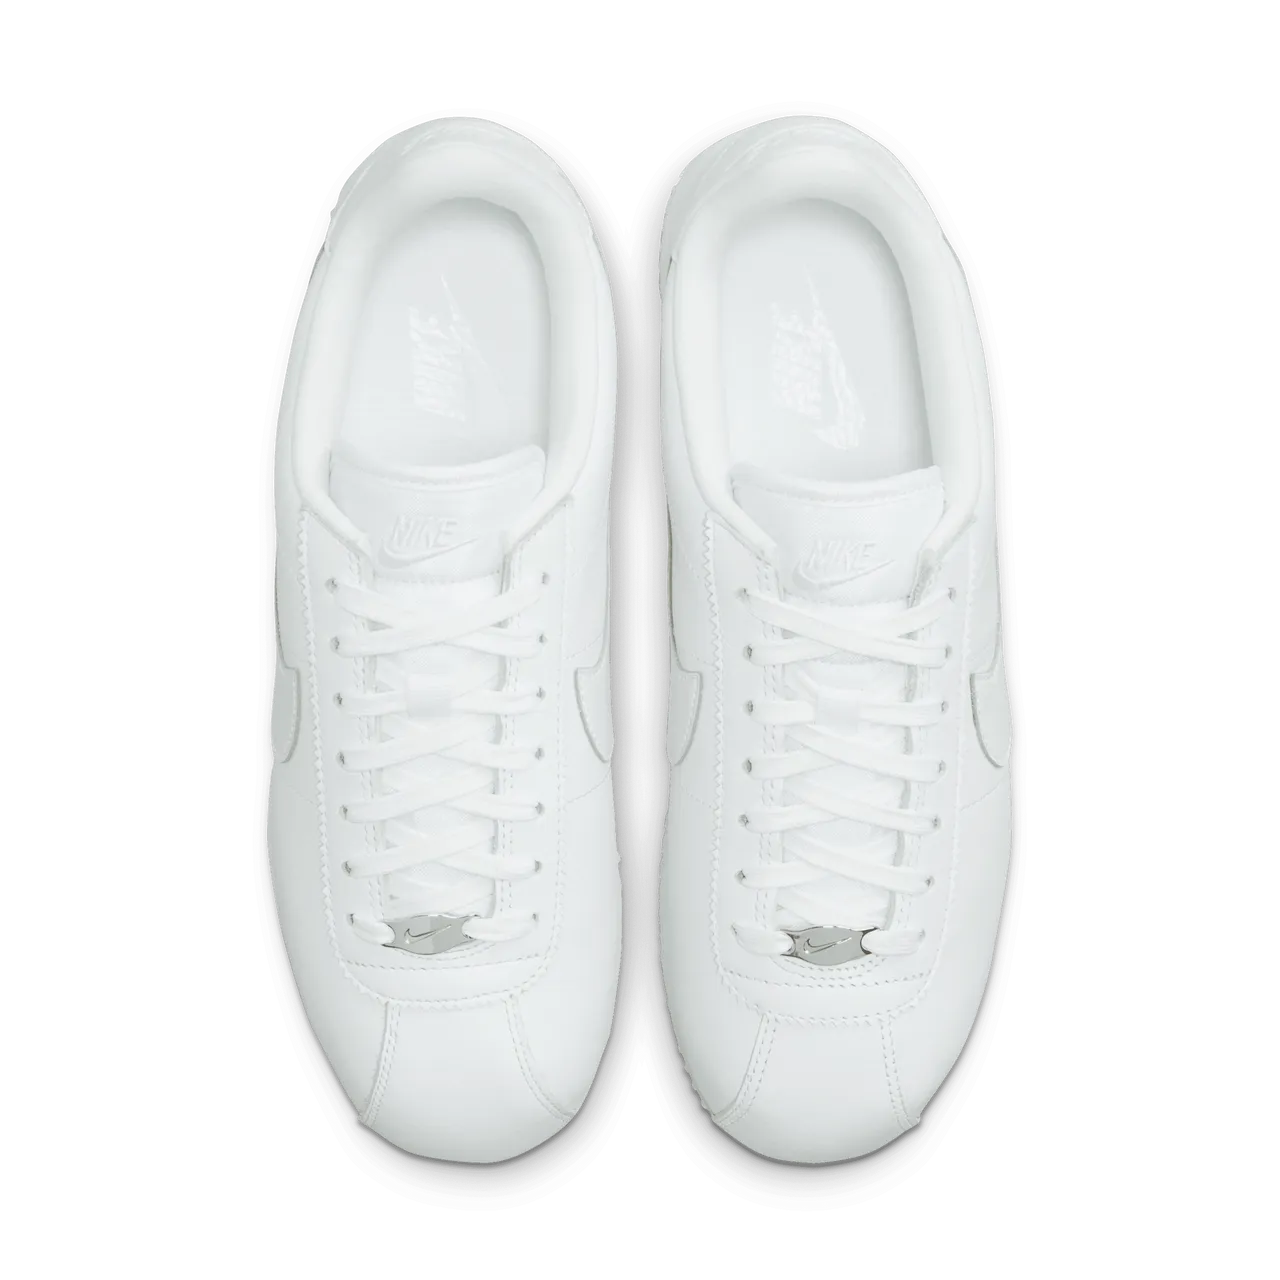 Nike Cortez 23 Premium Leather Women's Shoes - White - Leather